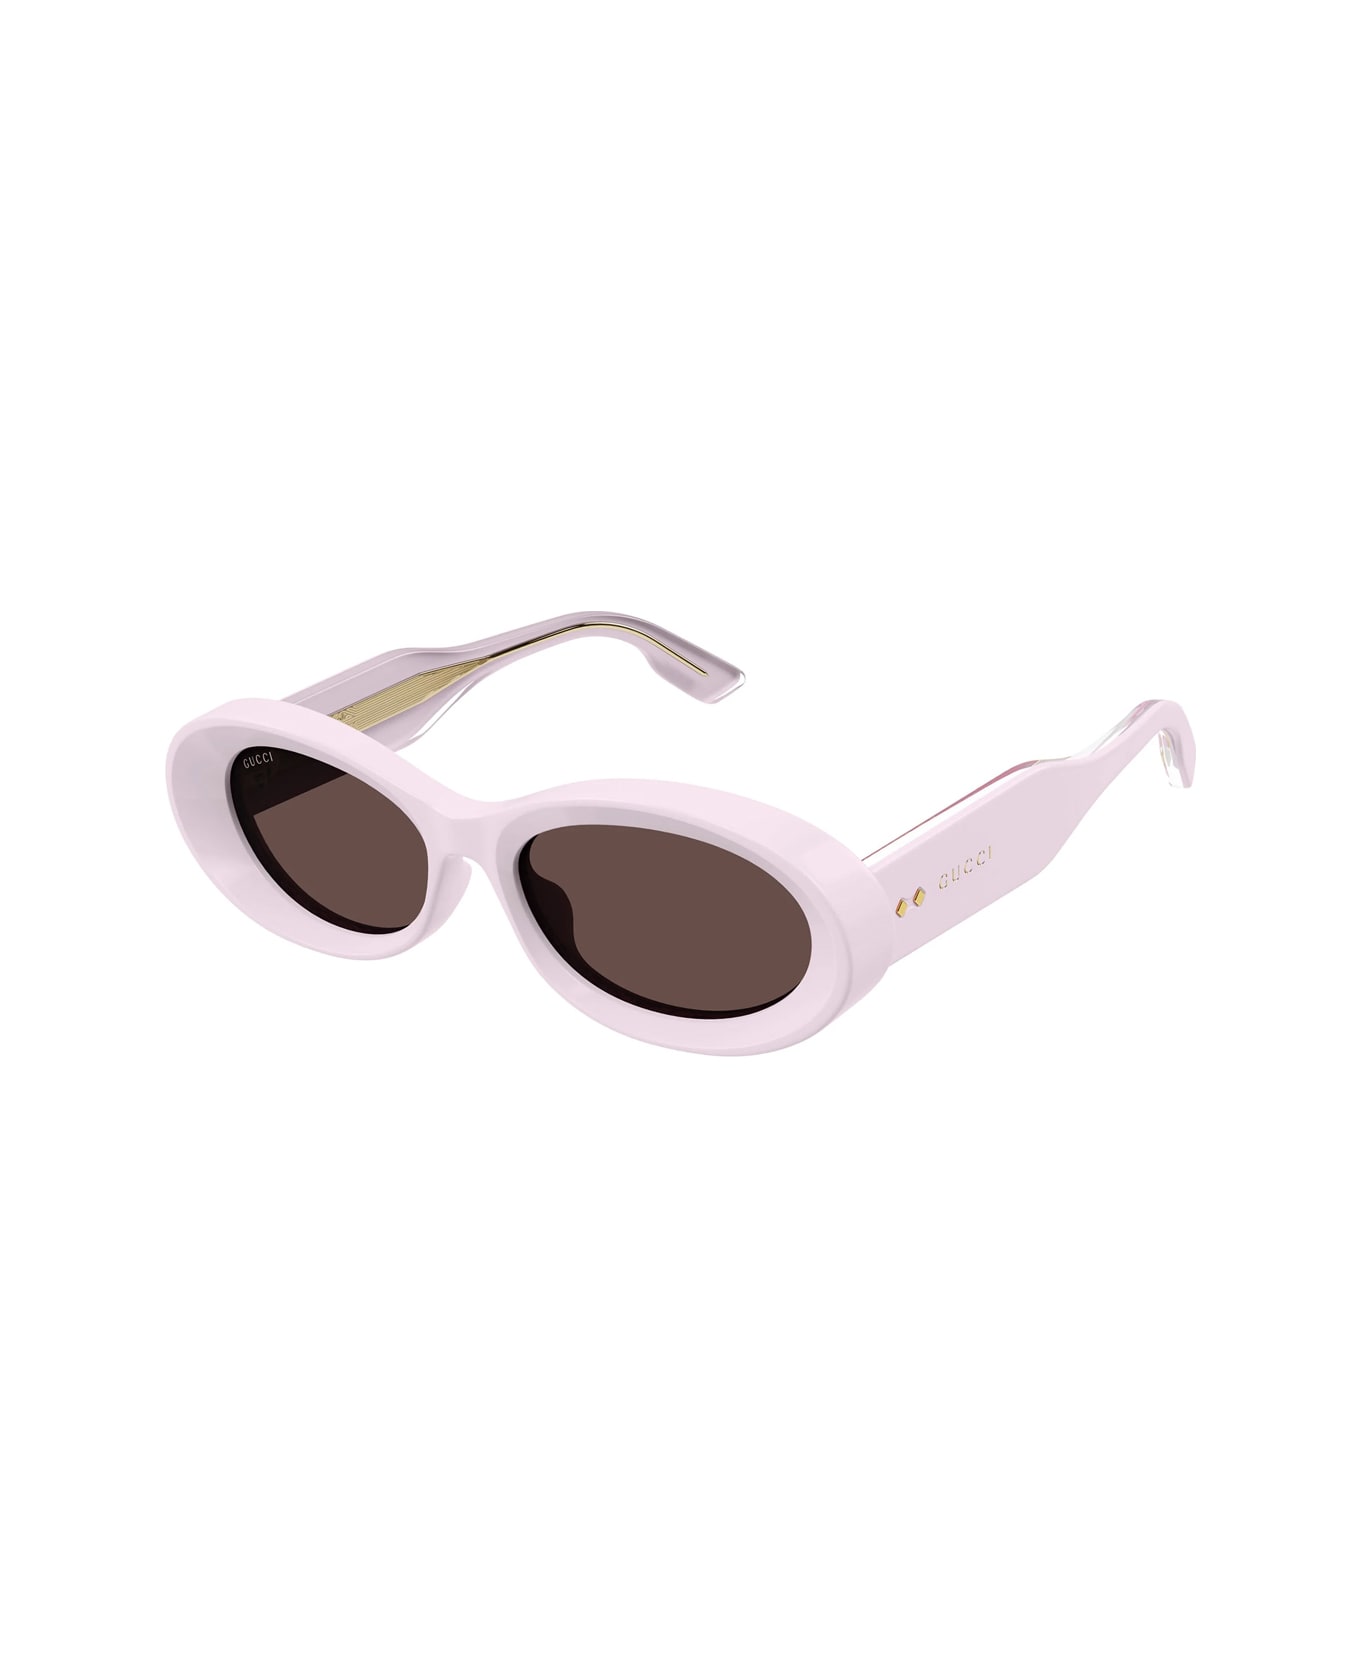 Gucci Eyewear Gg1527s 003 Sunglasses - Rosa サングラス